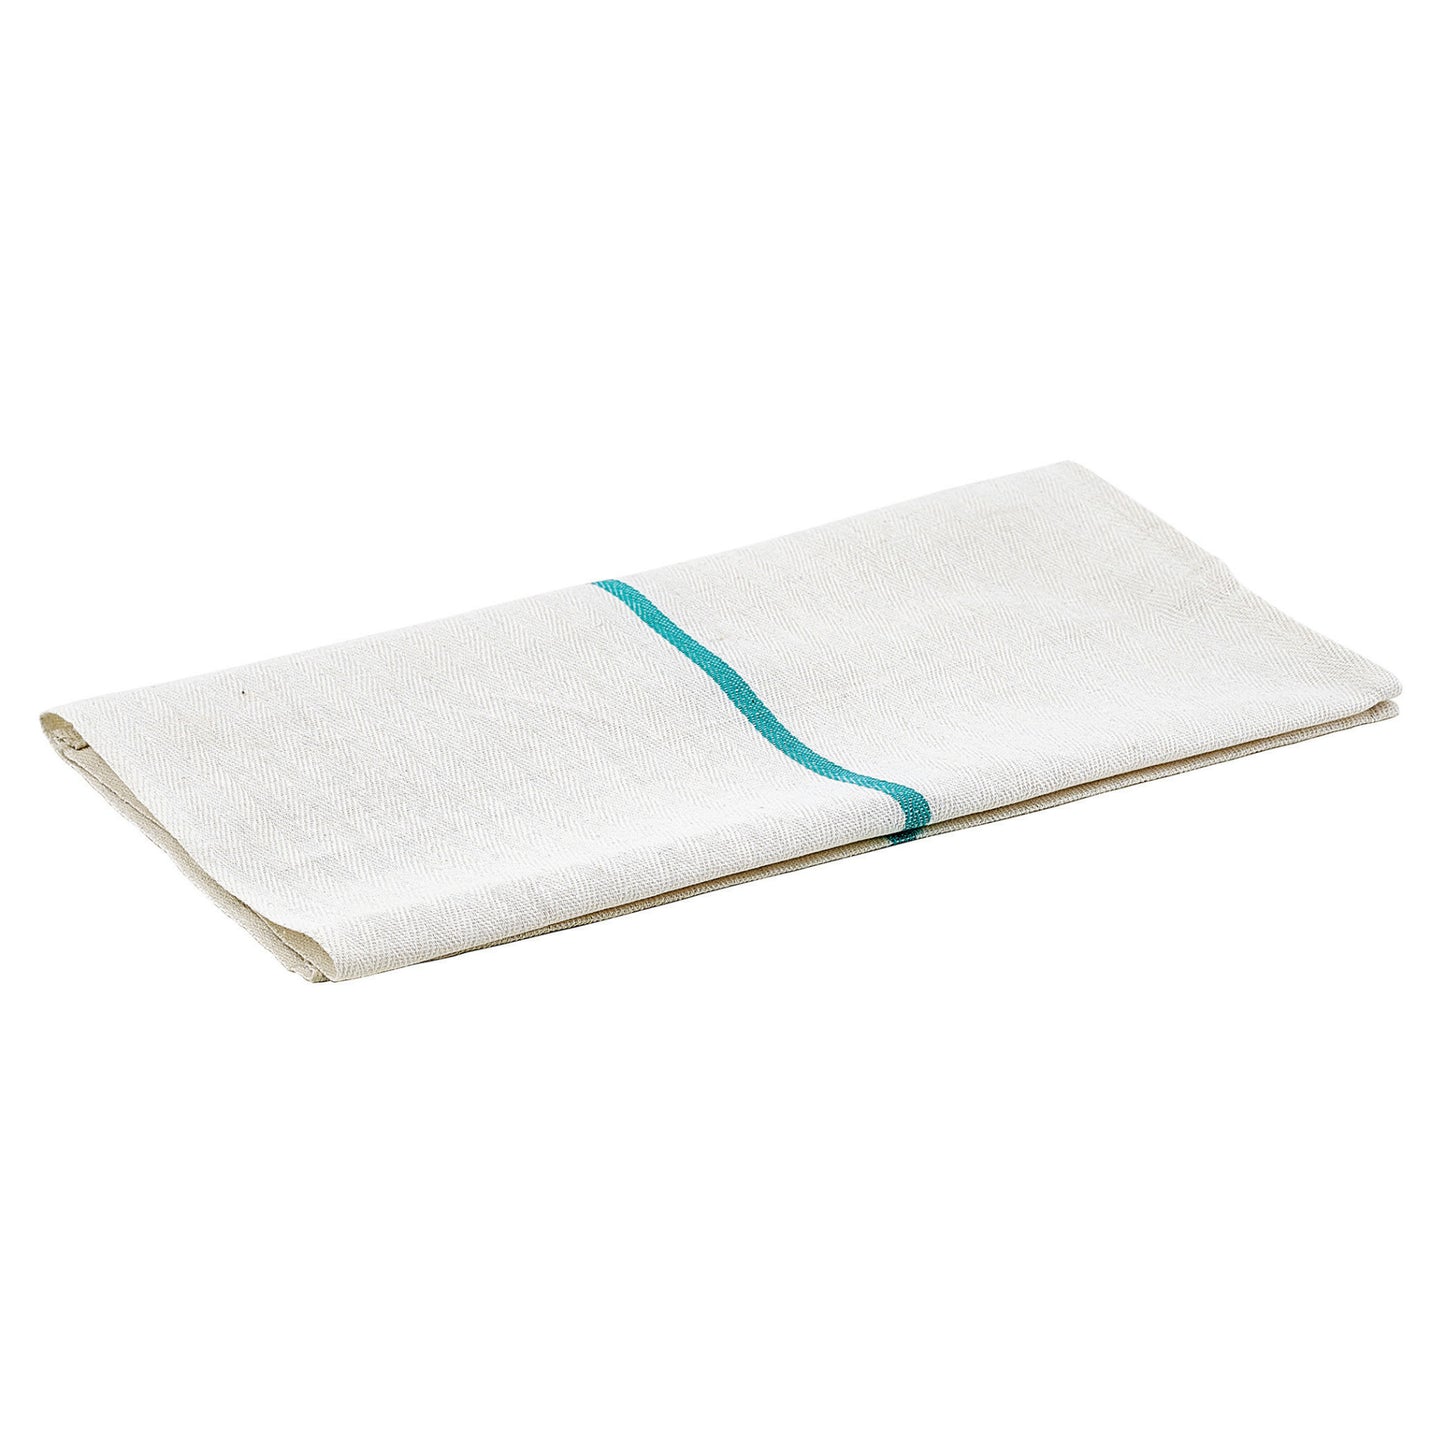 BTH-2028G - Cotton Herringbone Towel, Green Stripe, 20" x 26"